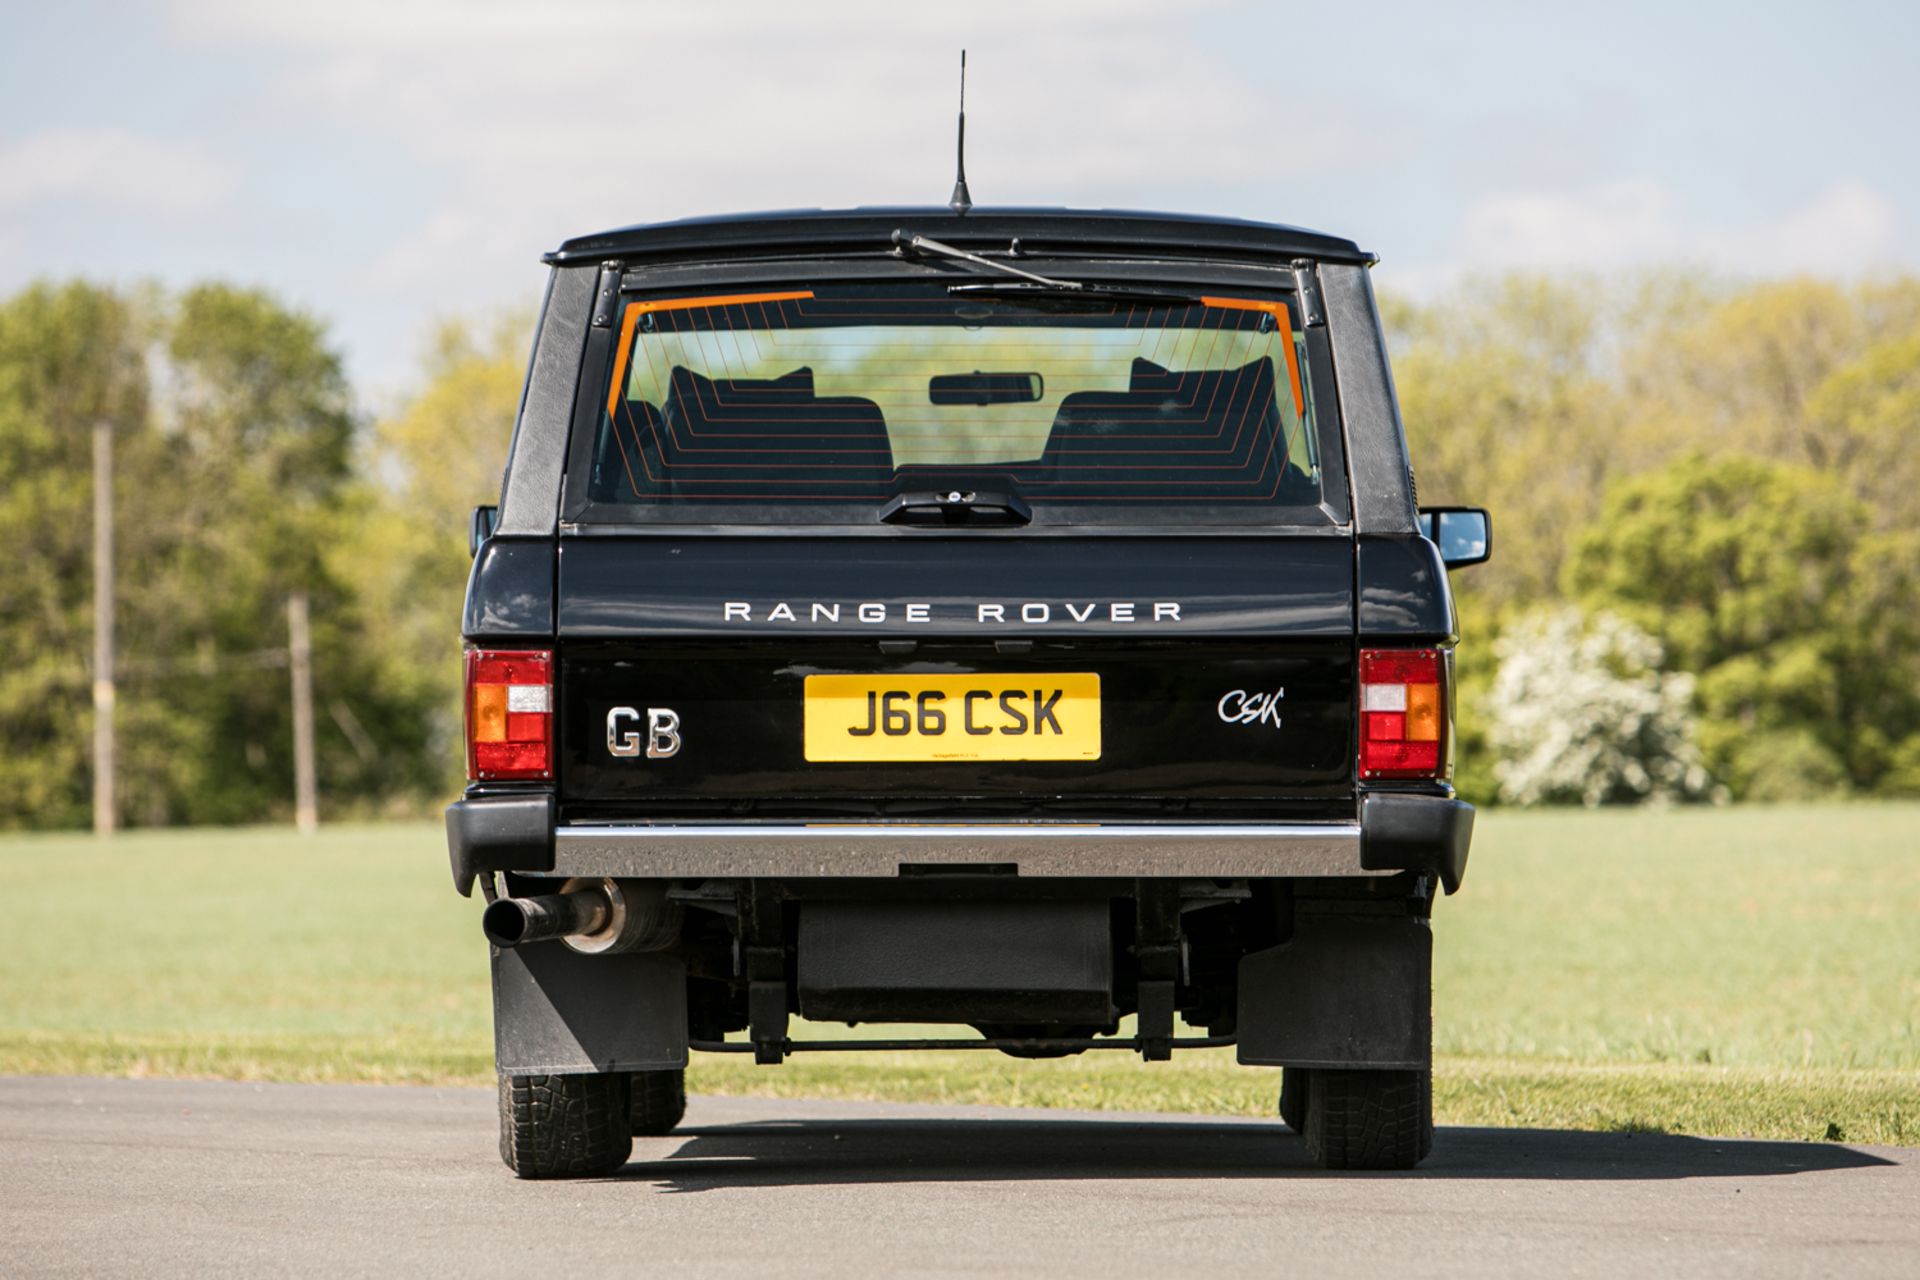 1991 Range Rover CSK - Image 3 of 27